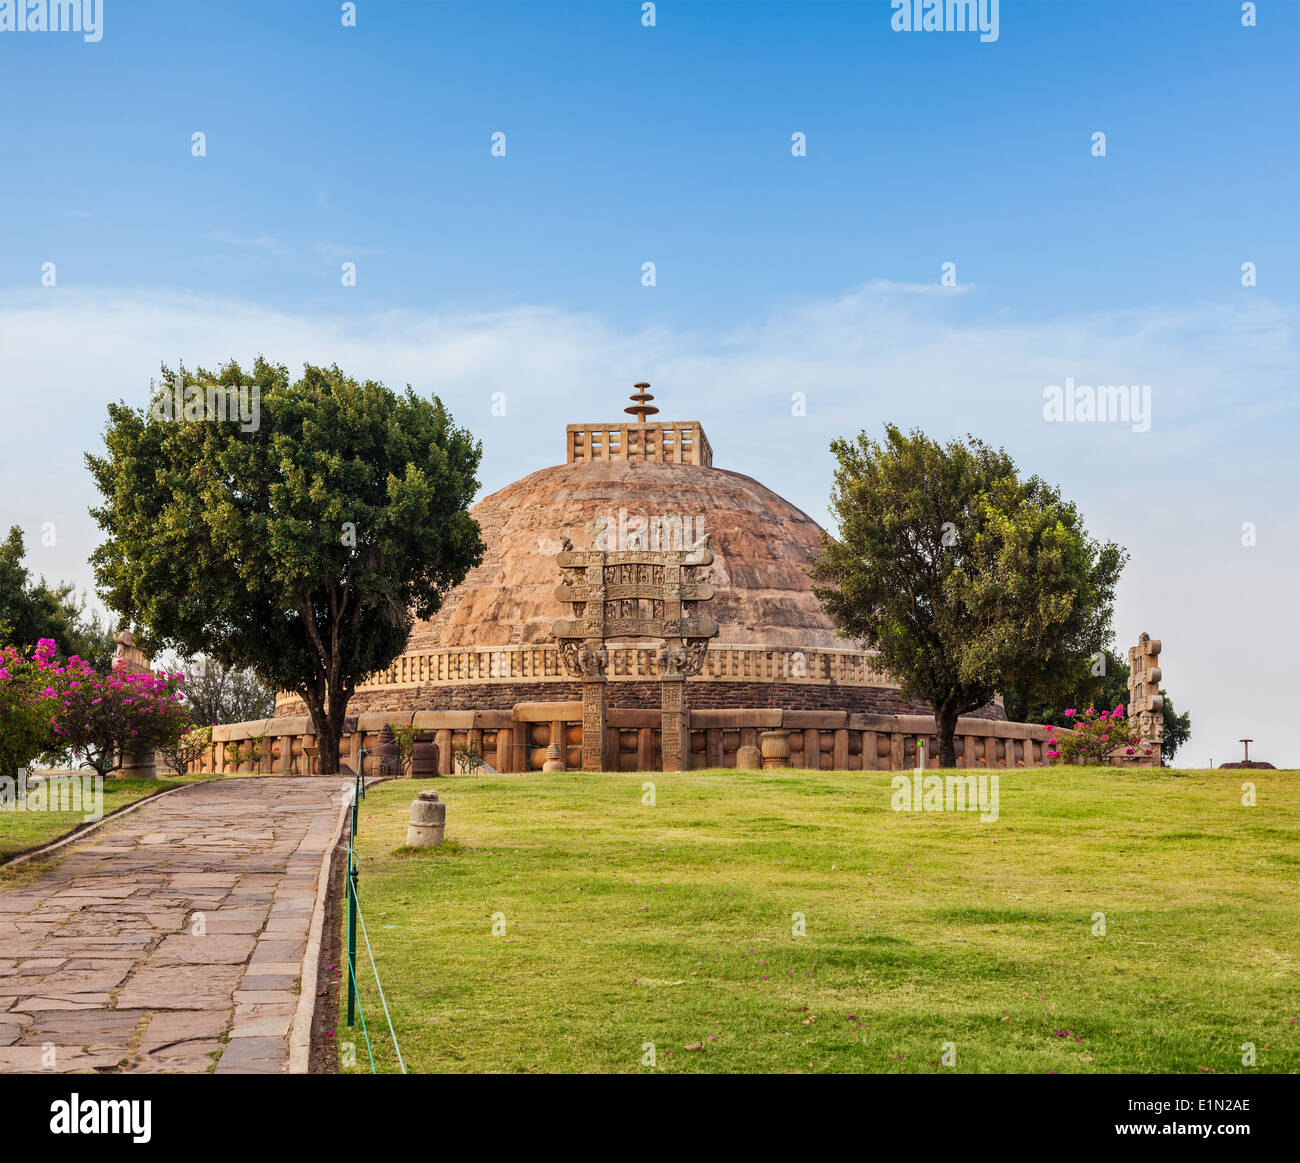 Great Stupa - ancient Buddhist monument. Sanchi, Madhya Pradesh, India Stock Photo